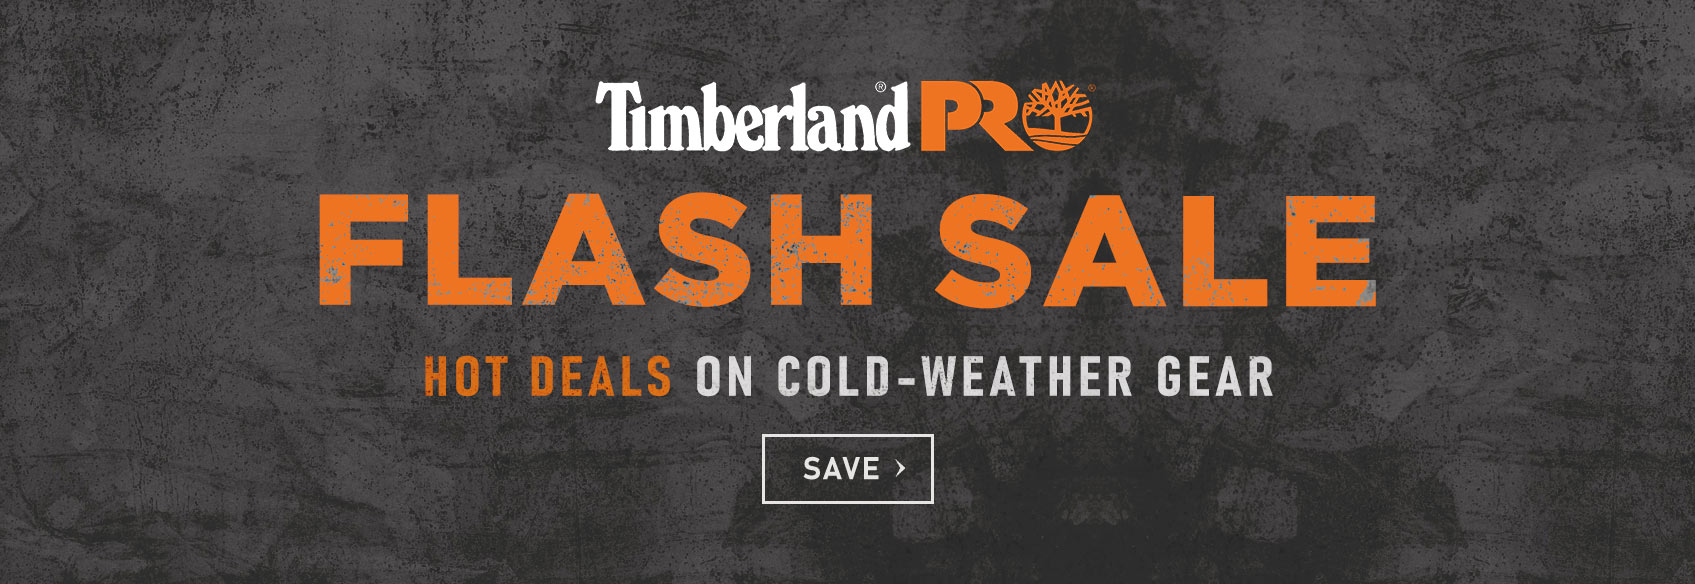 Flash Deals on TimberlandPRO